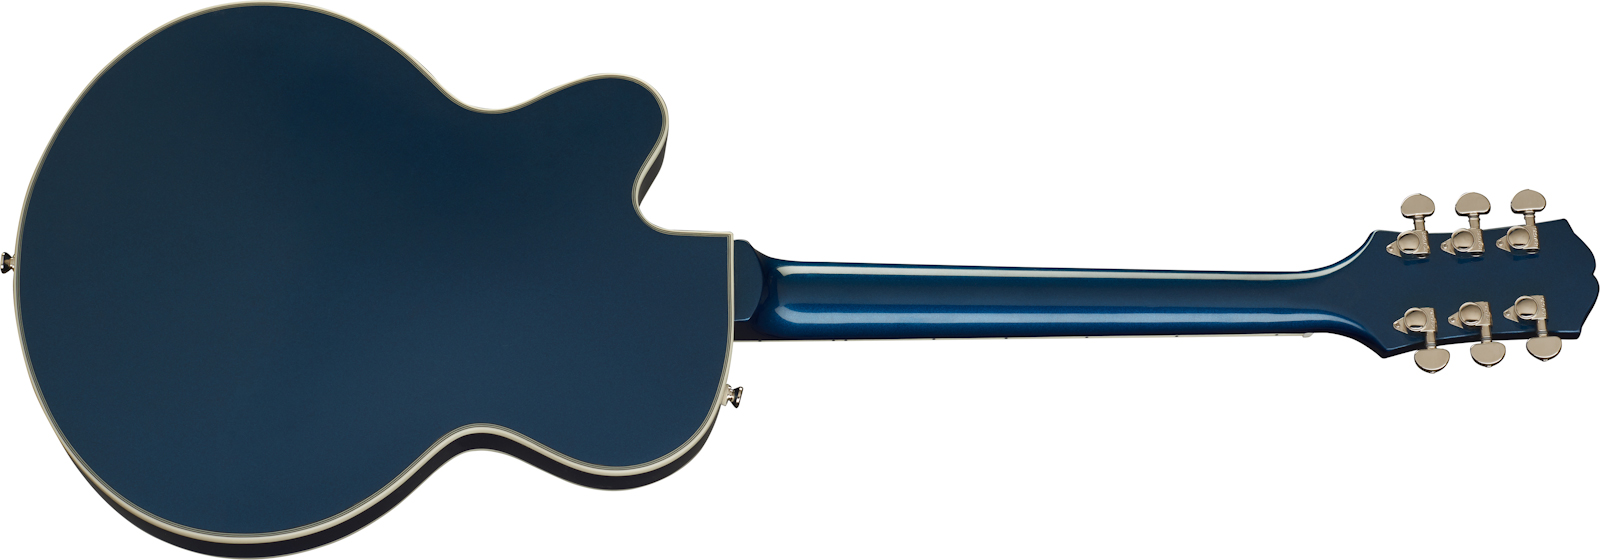 Epiphone Uptown Kat Es Original 2h Ht Eb - Sapphire Blue Metallic - Semi-Hollow E-Gitarre - Variation 1